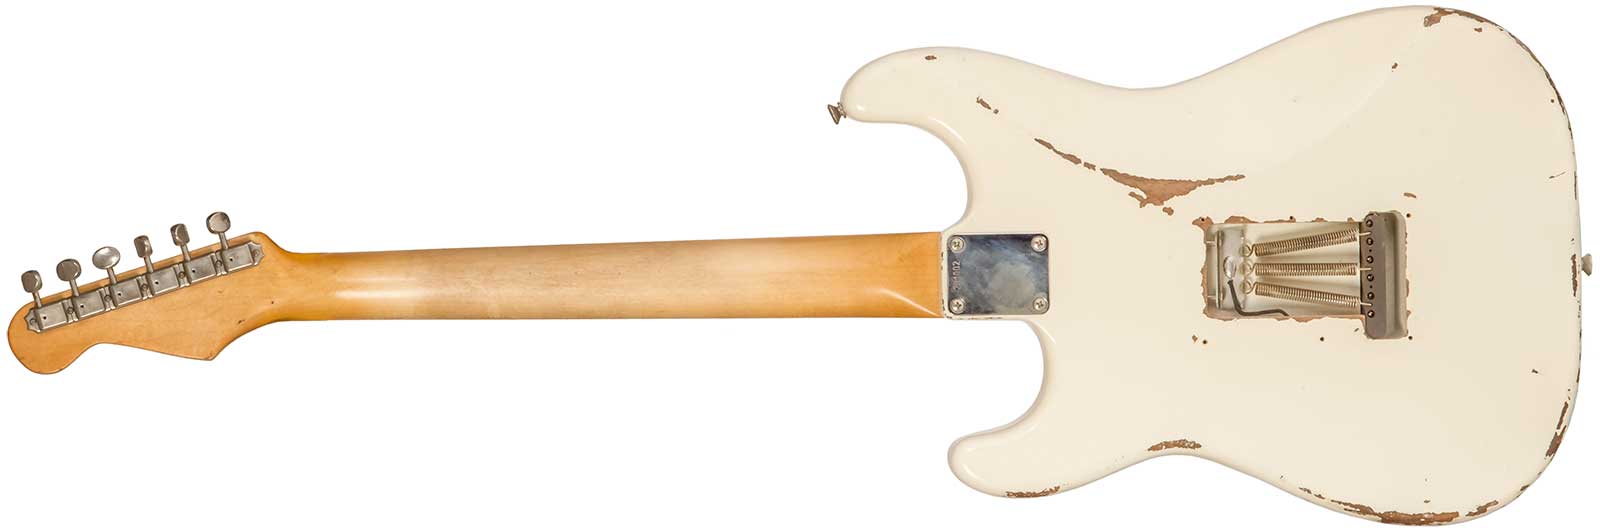 Rebelrelic S-series 1962 3s Trem Rw #231002 - Olympic White - Guitare Électrique Forme Str - Variation 1